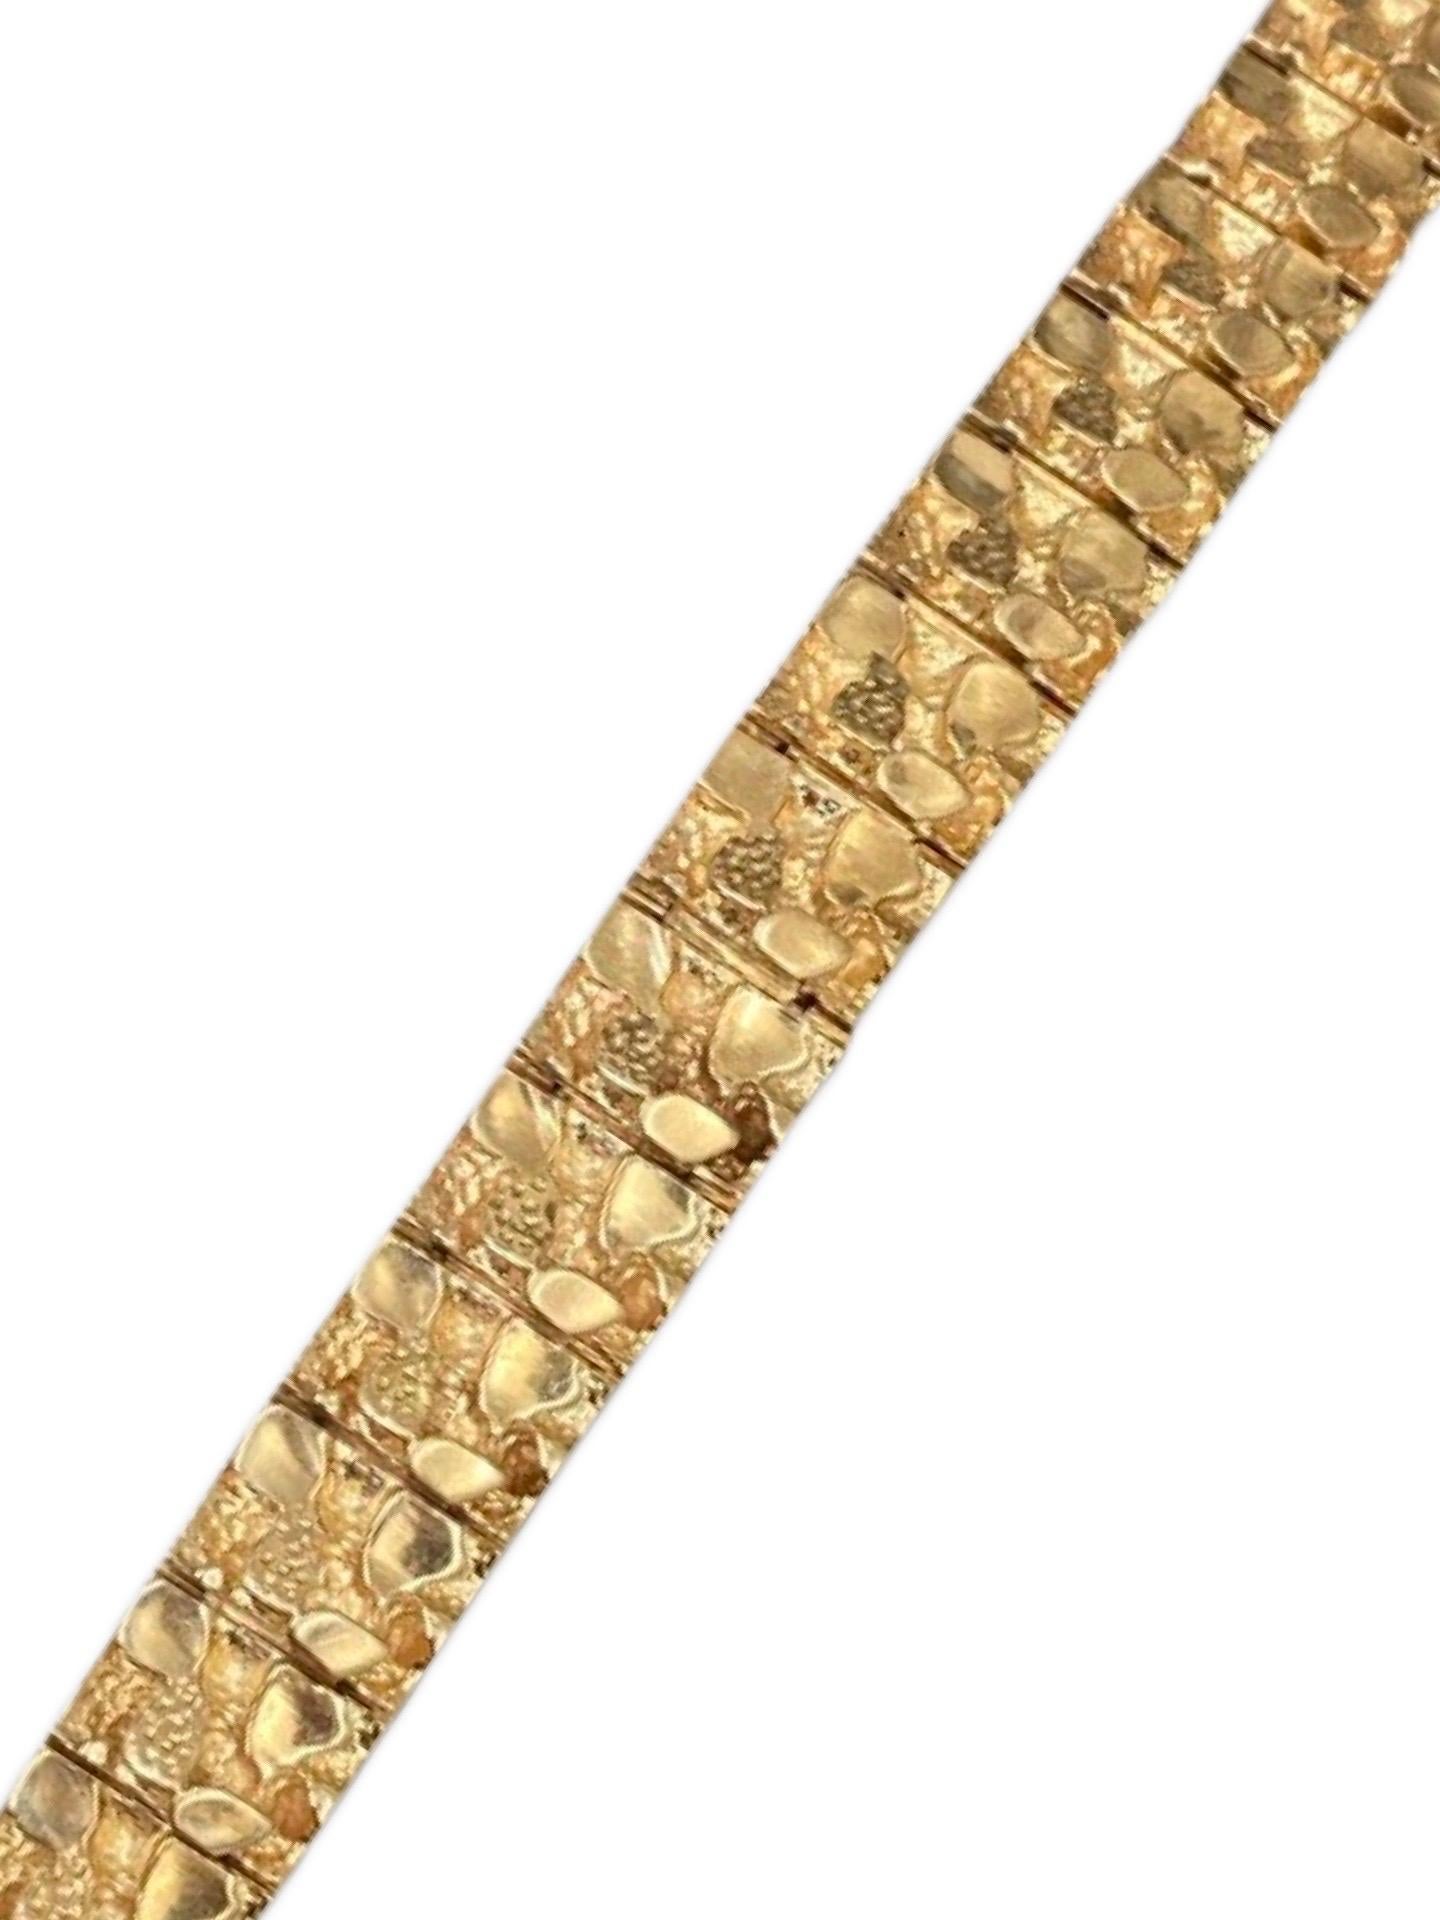 Vintage 12mm Nugget Design Bracelet 14k 8 Inch. Bracelet très lourd pesant 61,5 g d'or massif. Chanté et gonflé en or 14k.